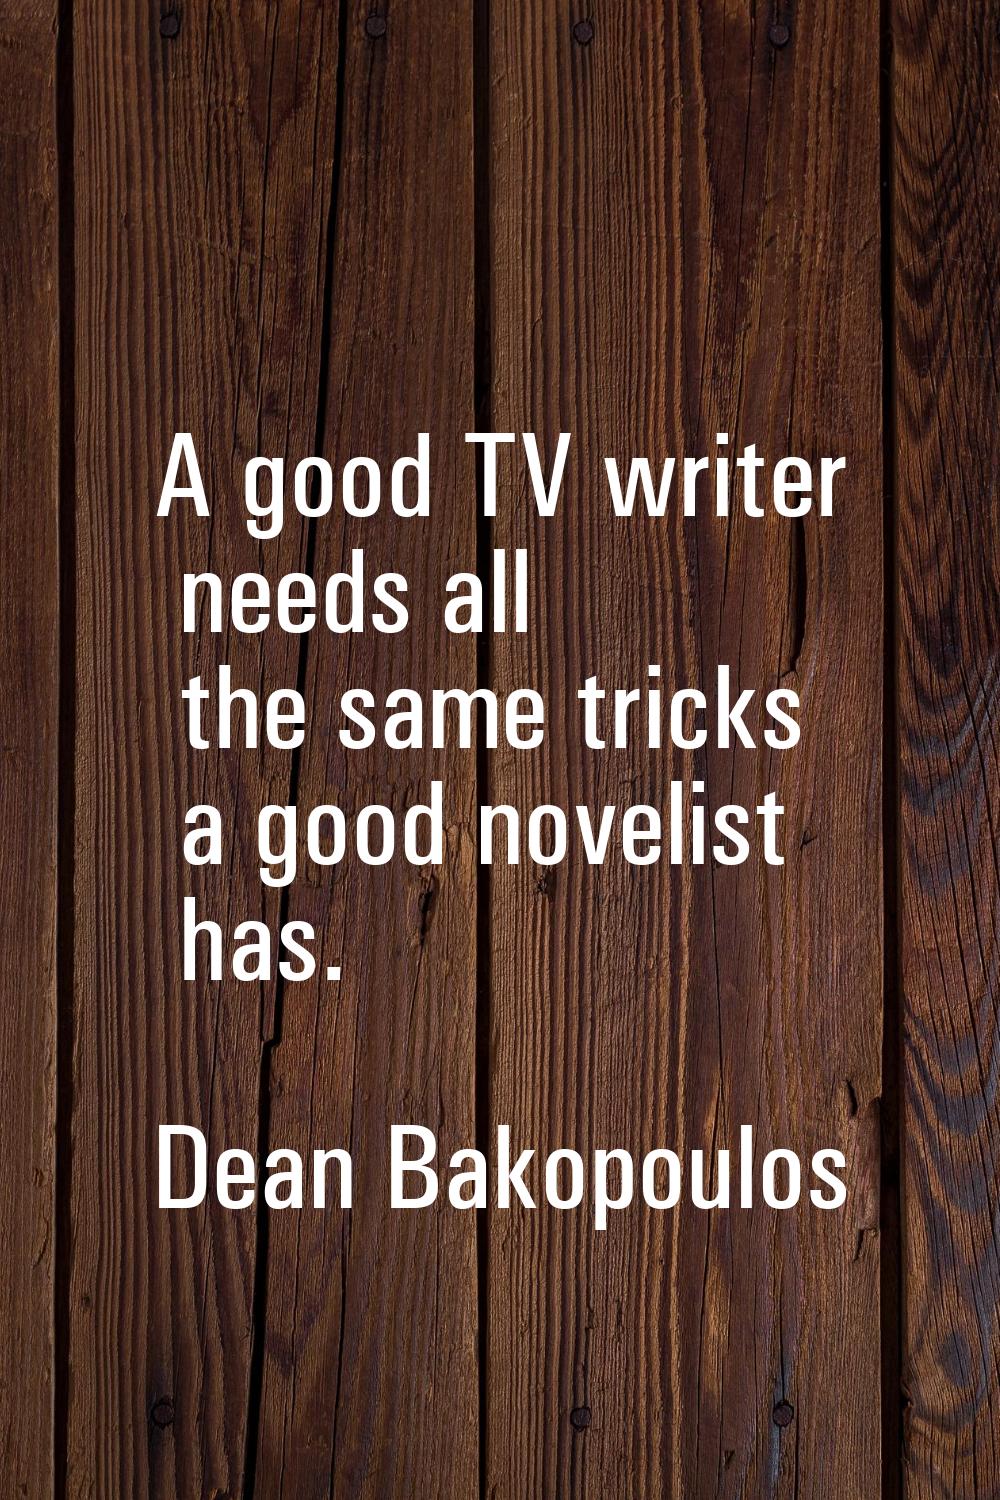 A good TV writer needs all the same tricks a good novelist has.